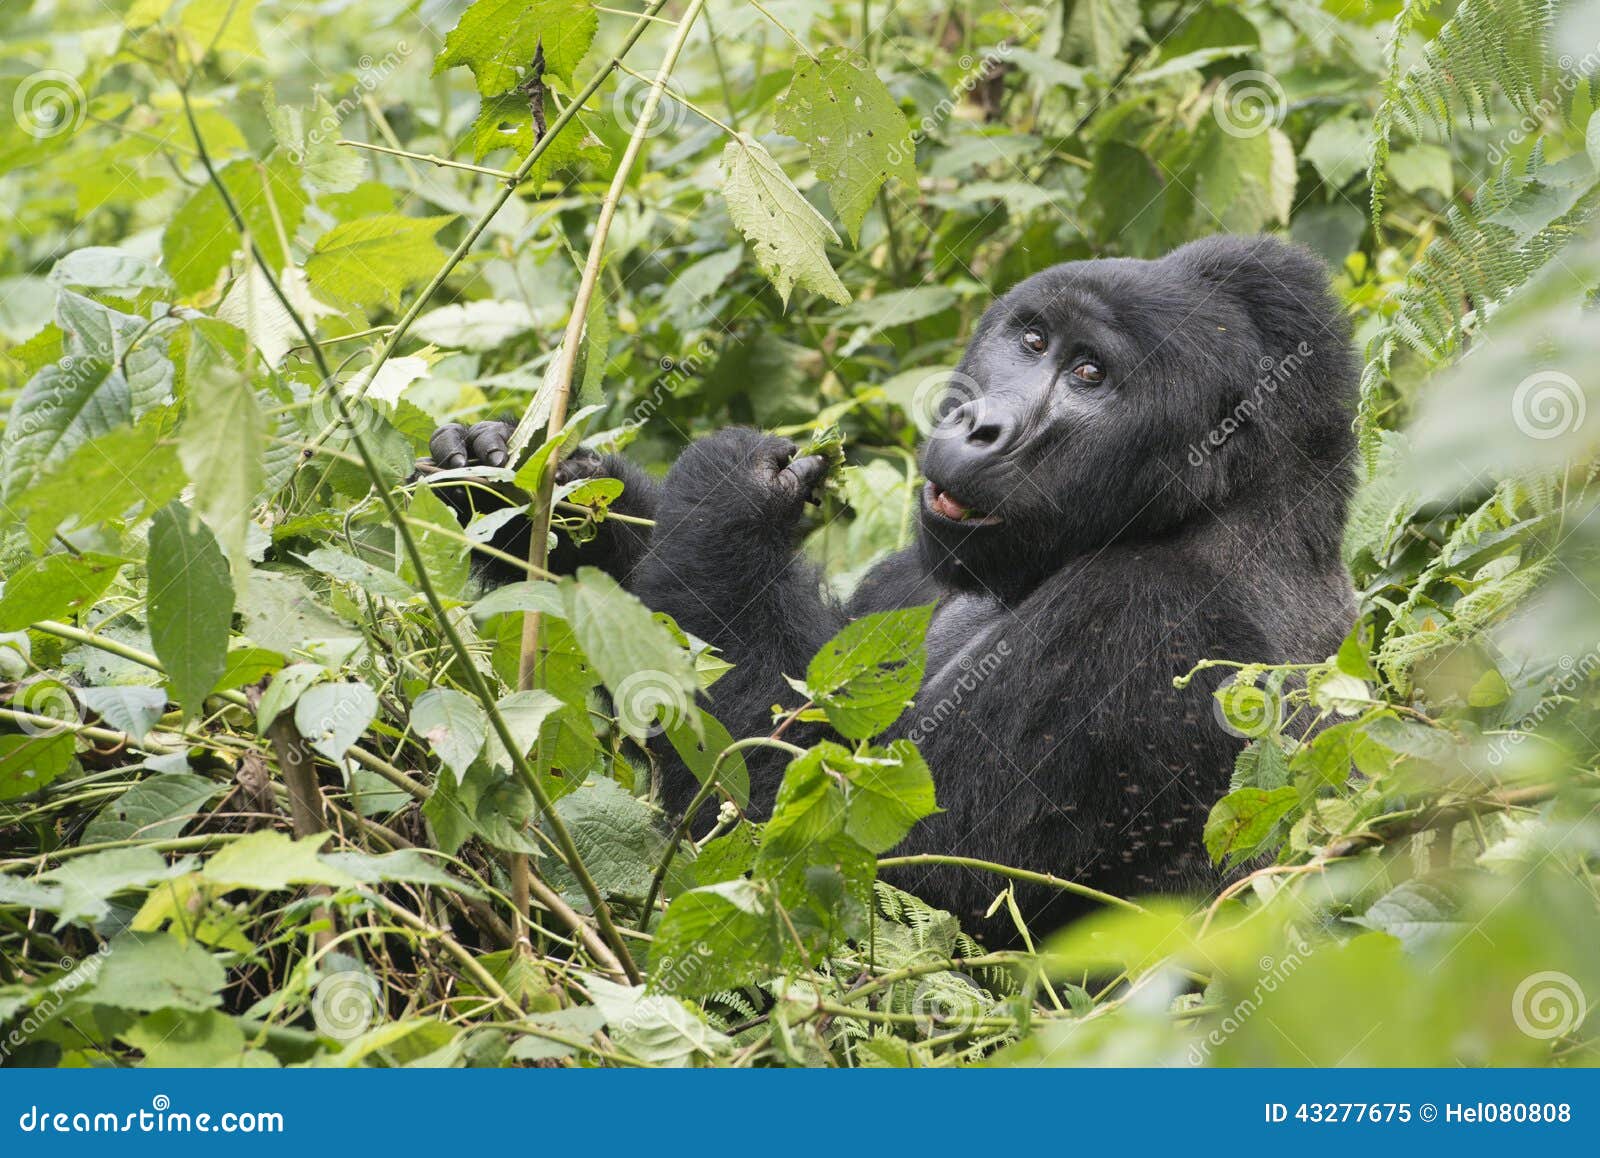 gorilla in the mountain rainforest of uganda